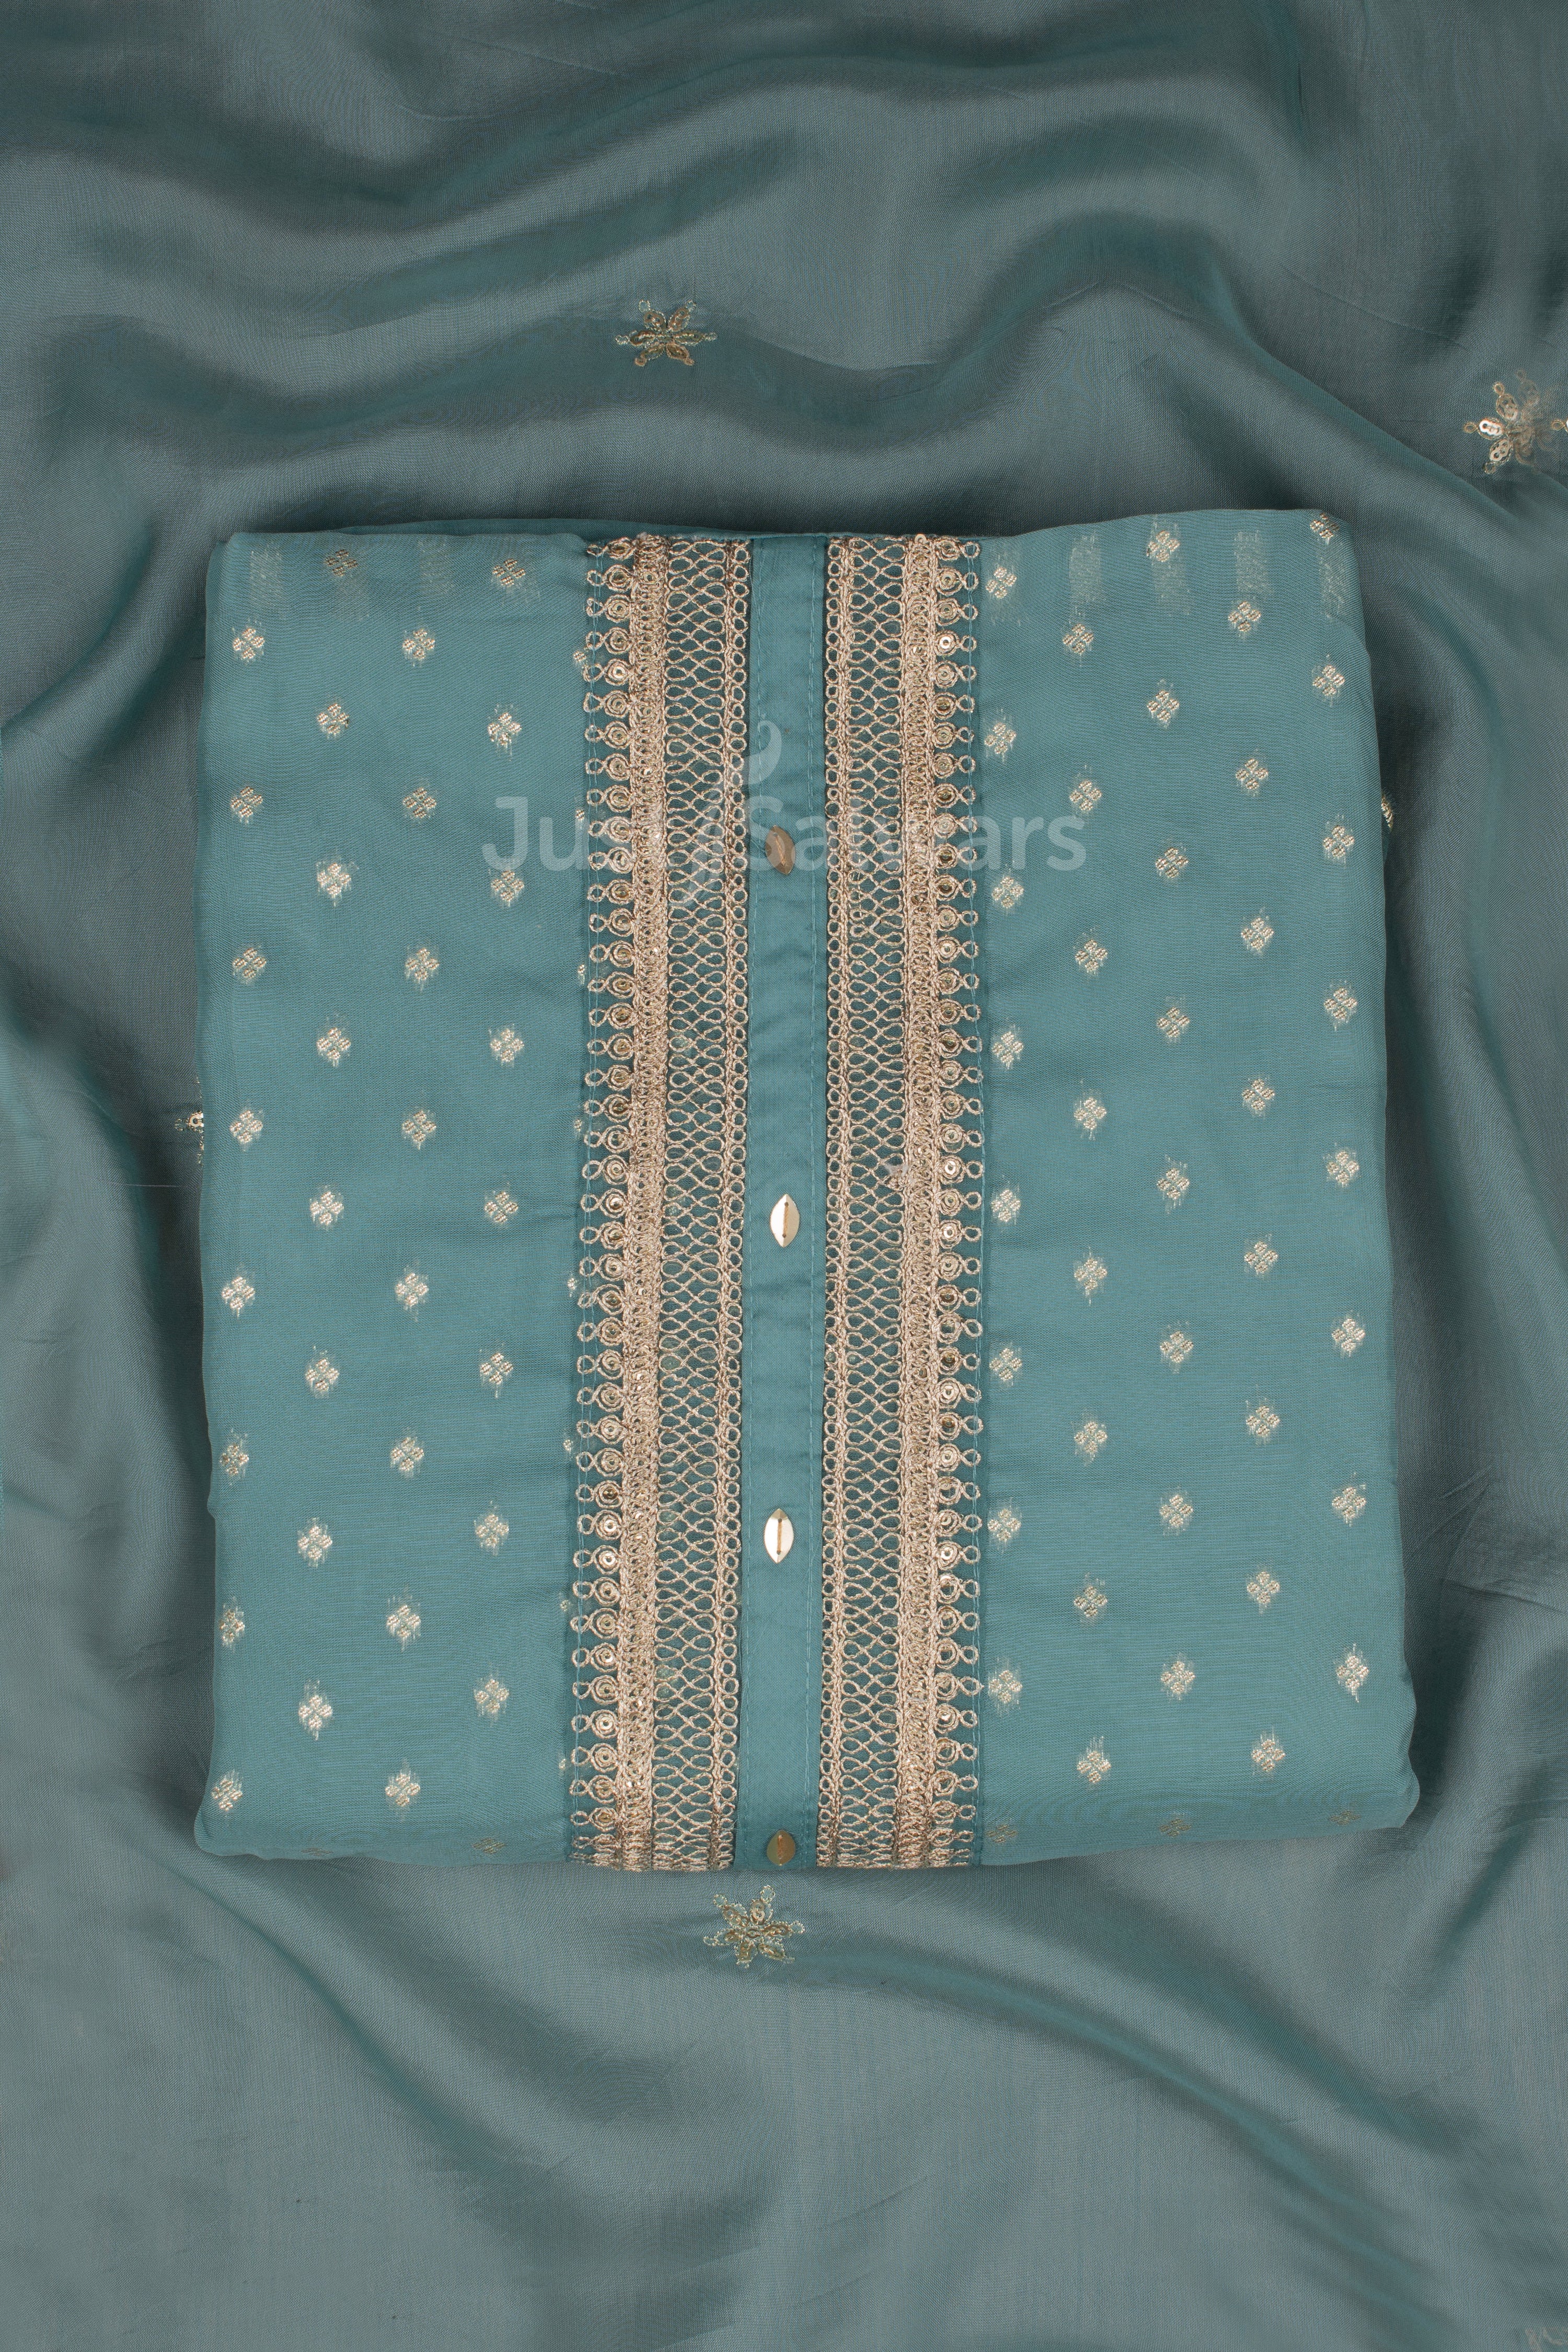 Blue Colour Unstitched Dress Material -Dress Material- Just Salwars